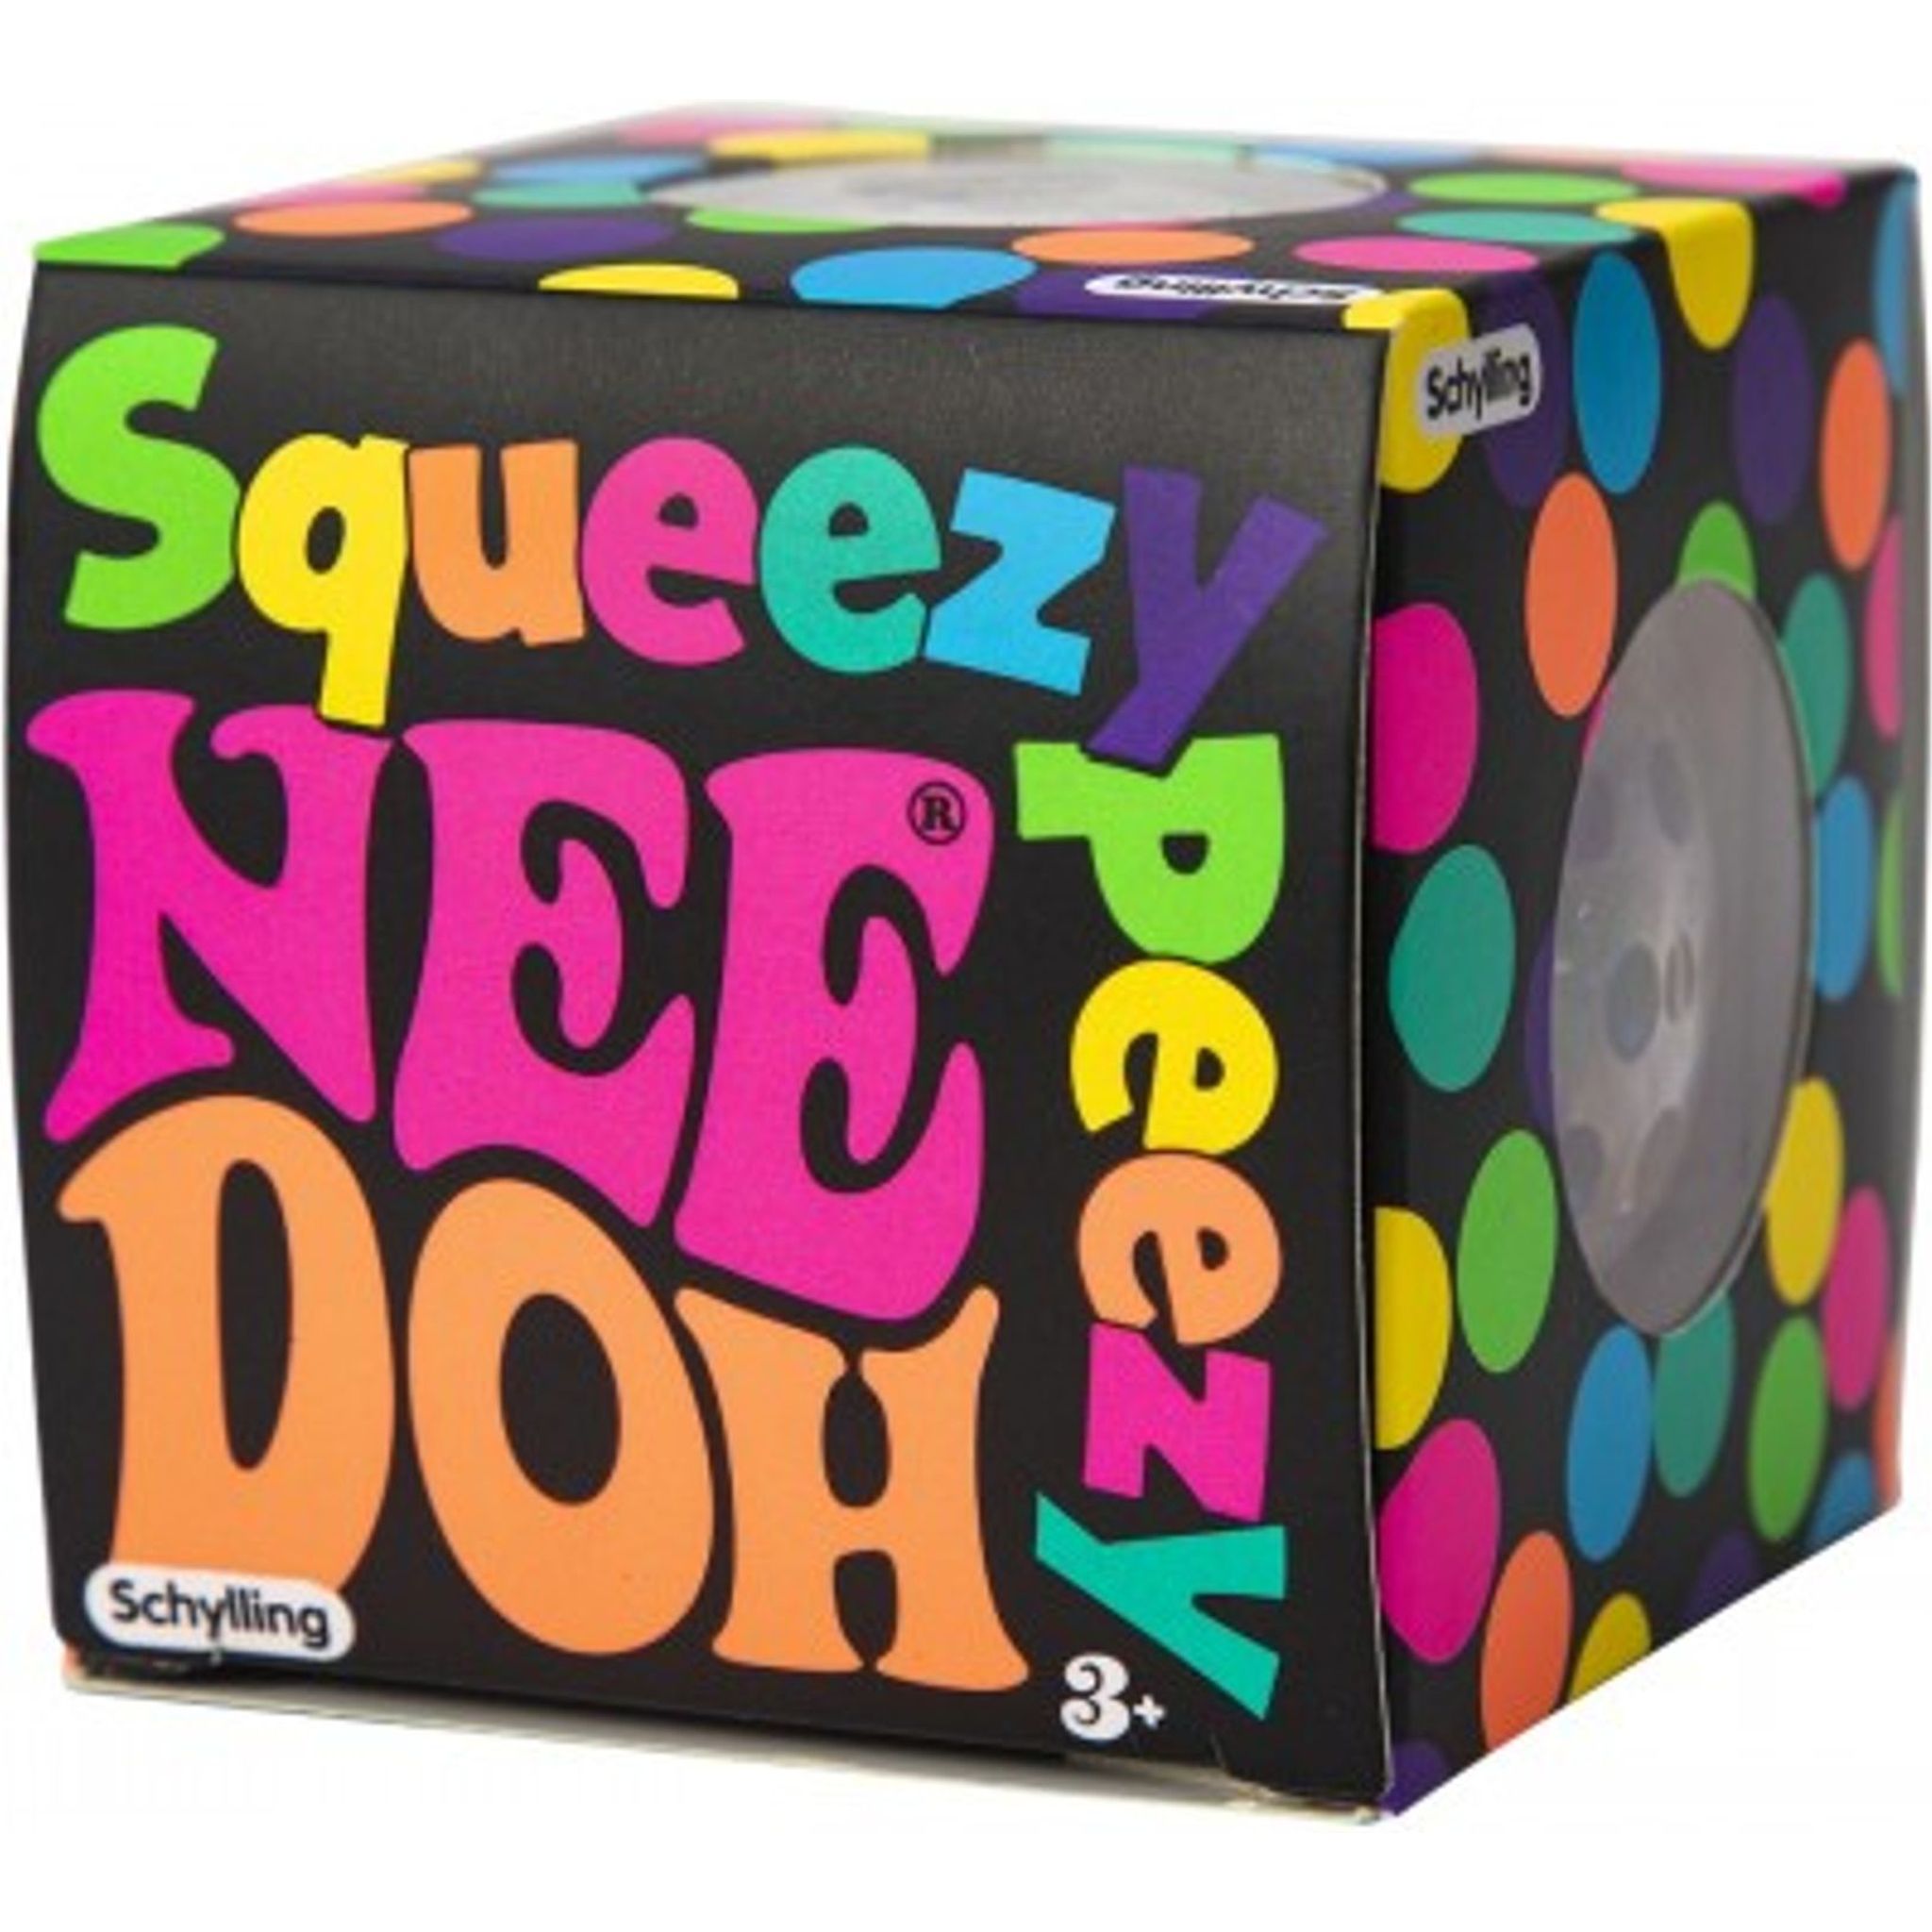 Squeezy Peezy Nee-Doh - Toybox Tales